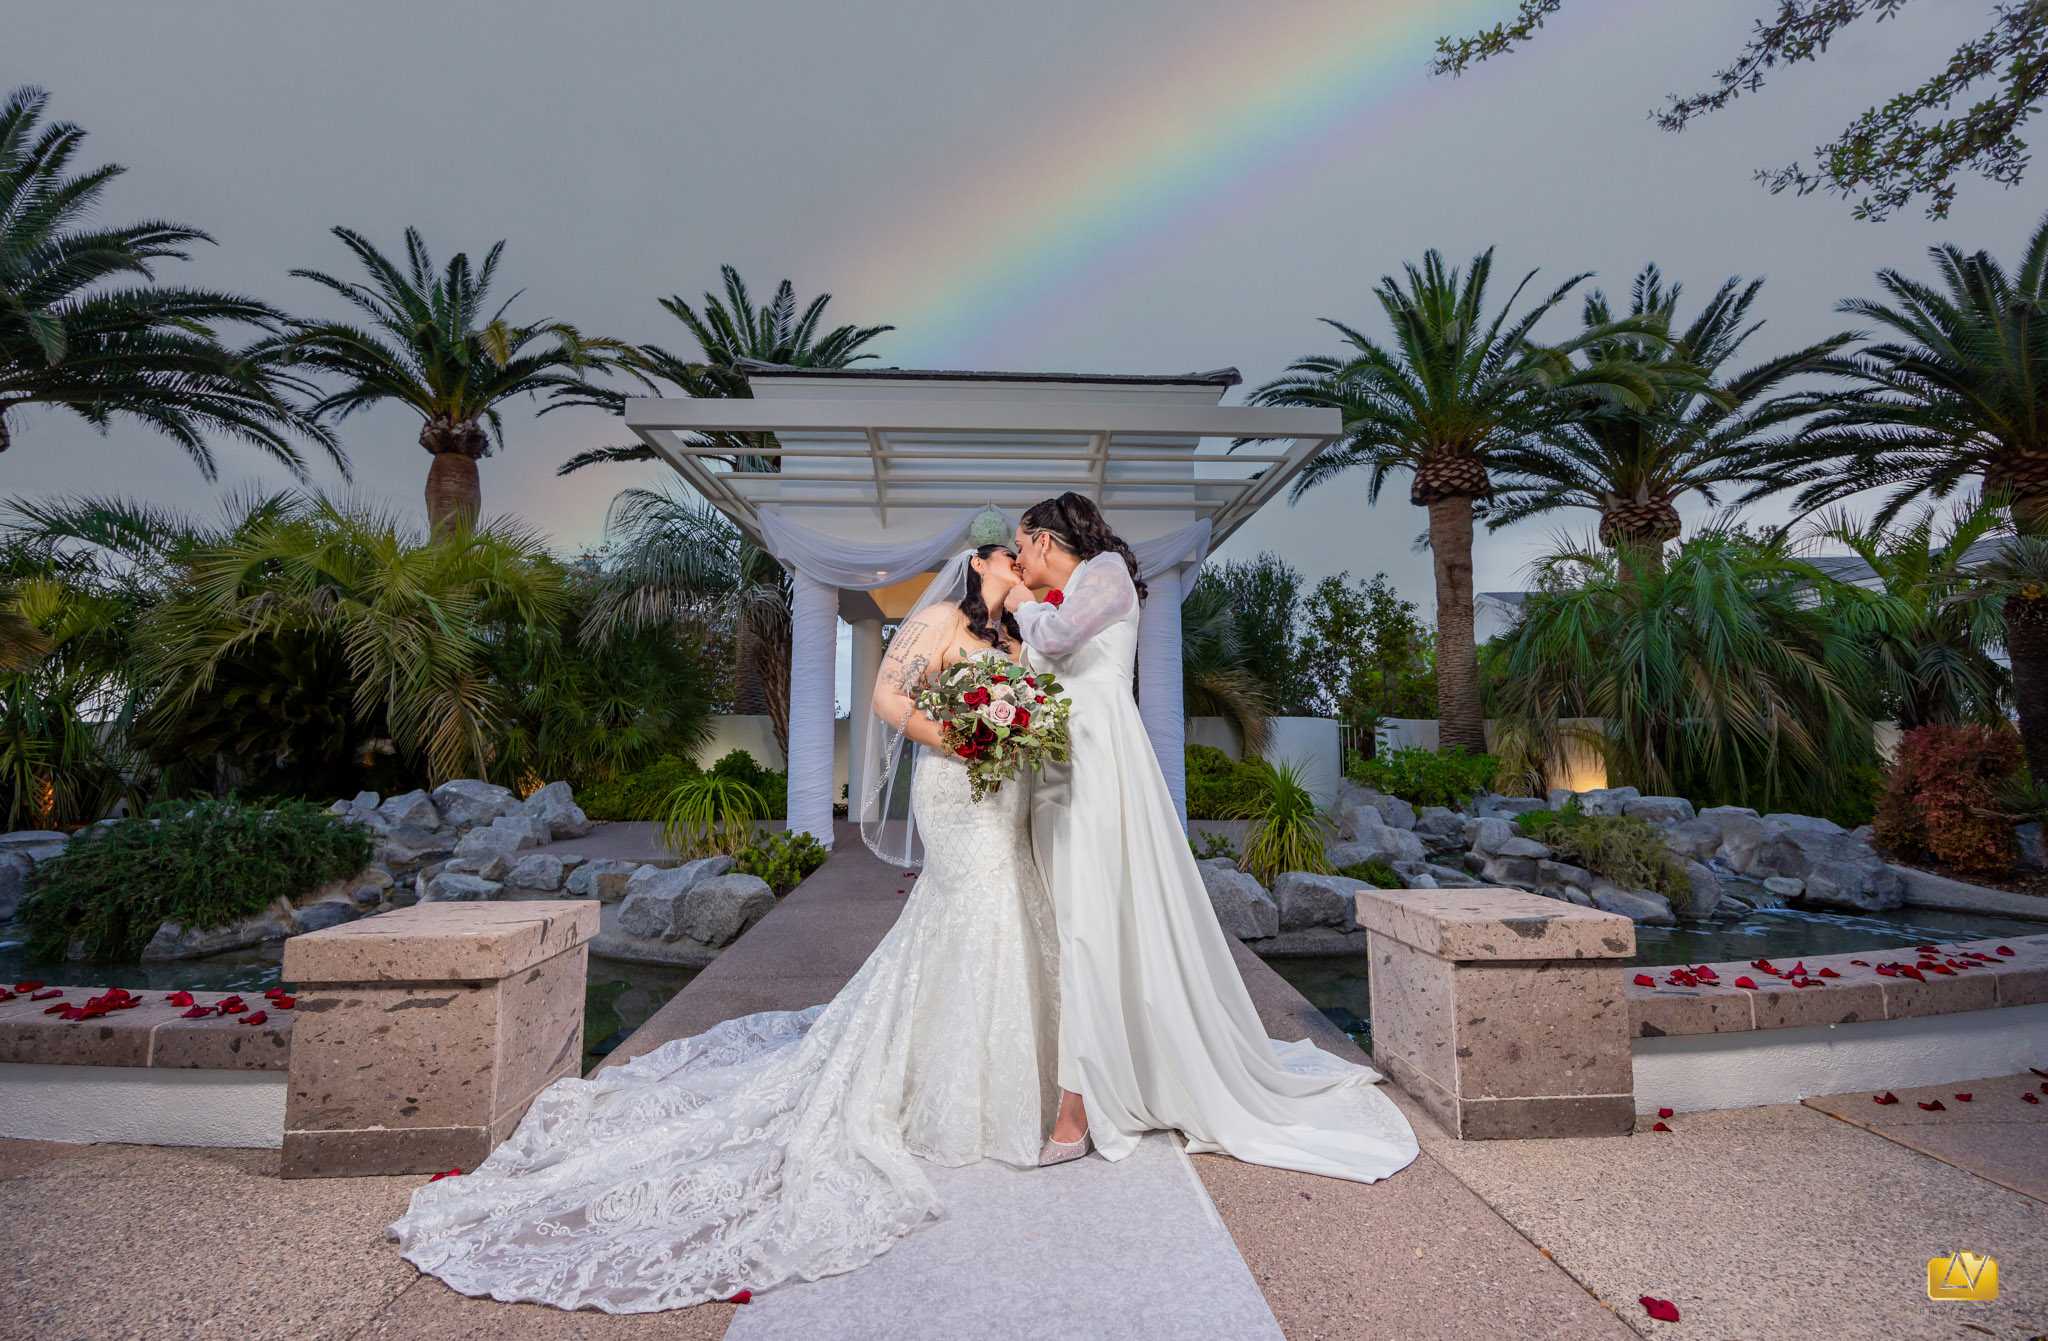 The best wedding photographer for Las Vegas Nevada area